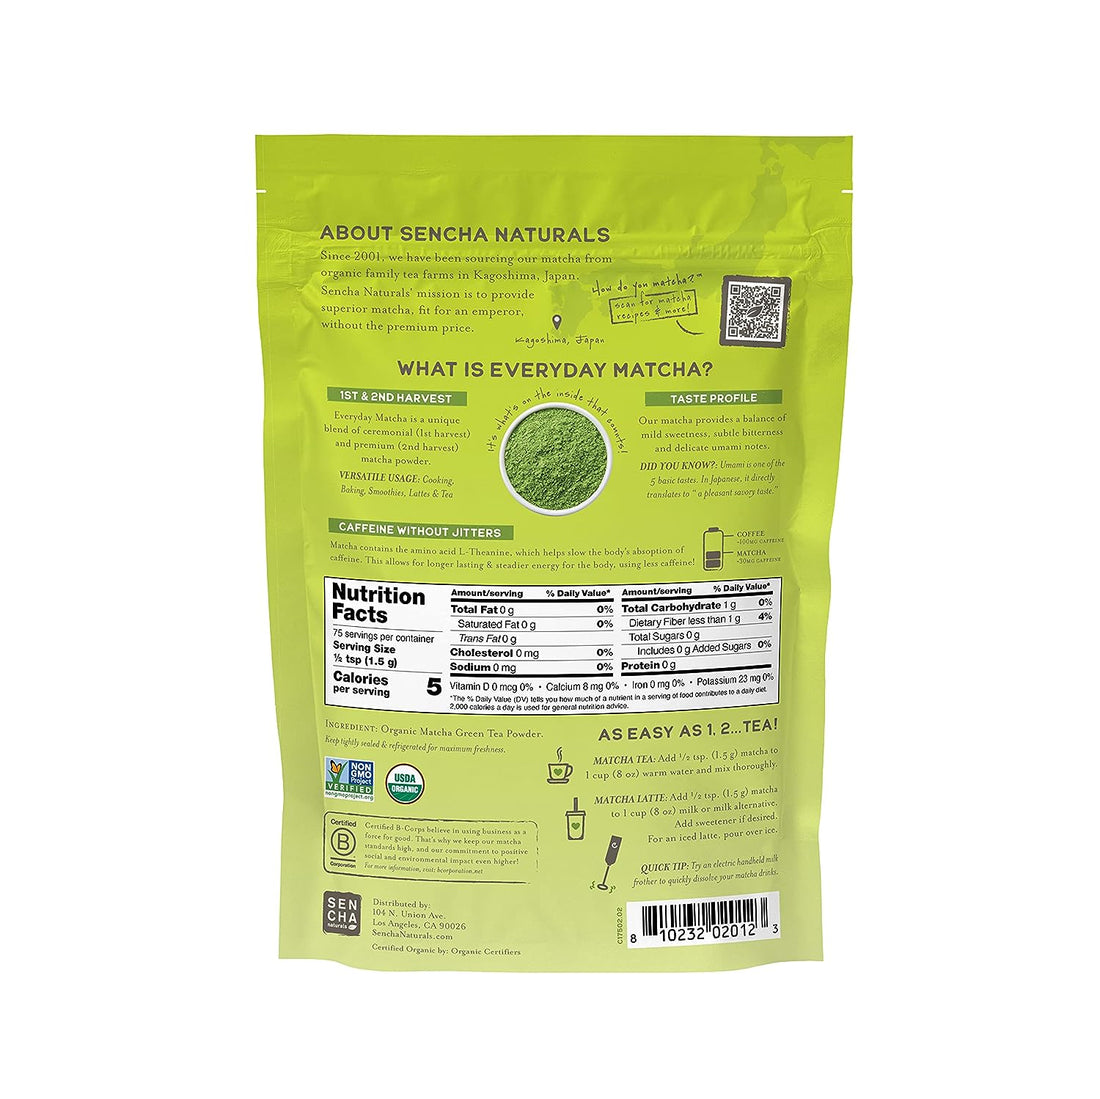 SEN CHA Naturals Organic Everyday Matcha Powder, Authentic Japanese Matcha Green Tea Powder, Premium First & Second Harvest Culinary Grade Organic Matcha Tea, Lattes & Baking, 12oz Bag (1 Pack)